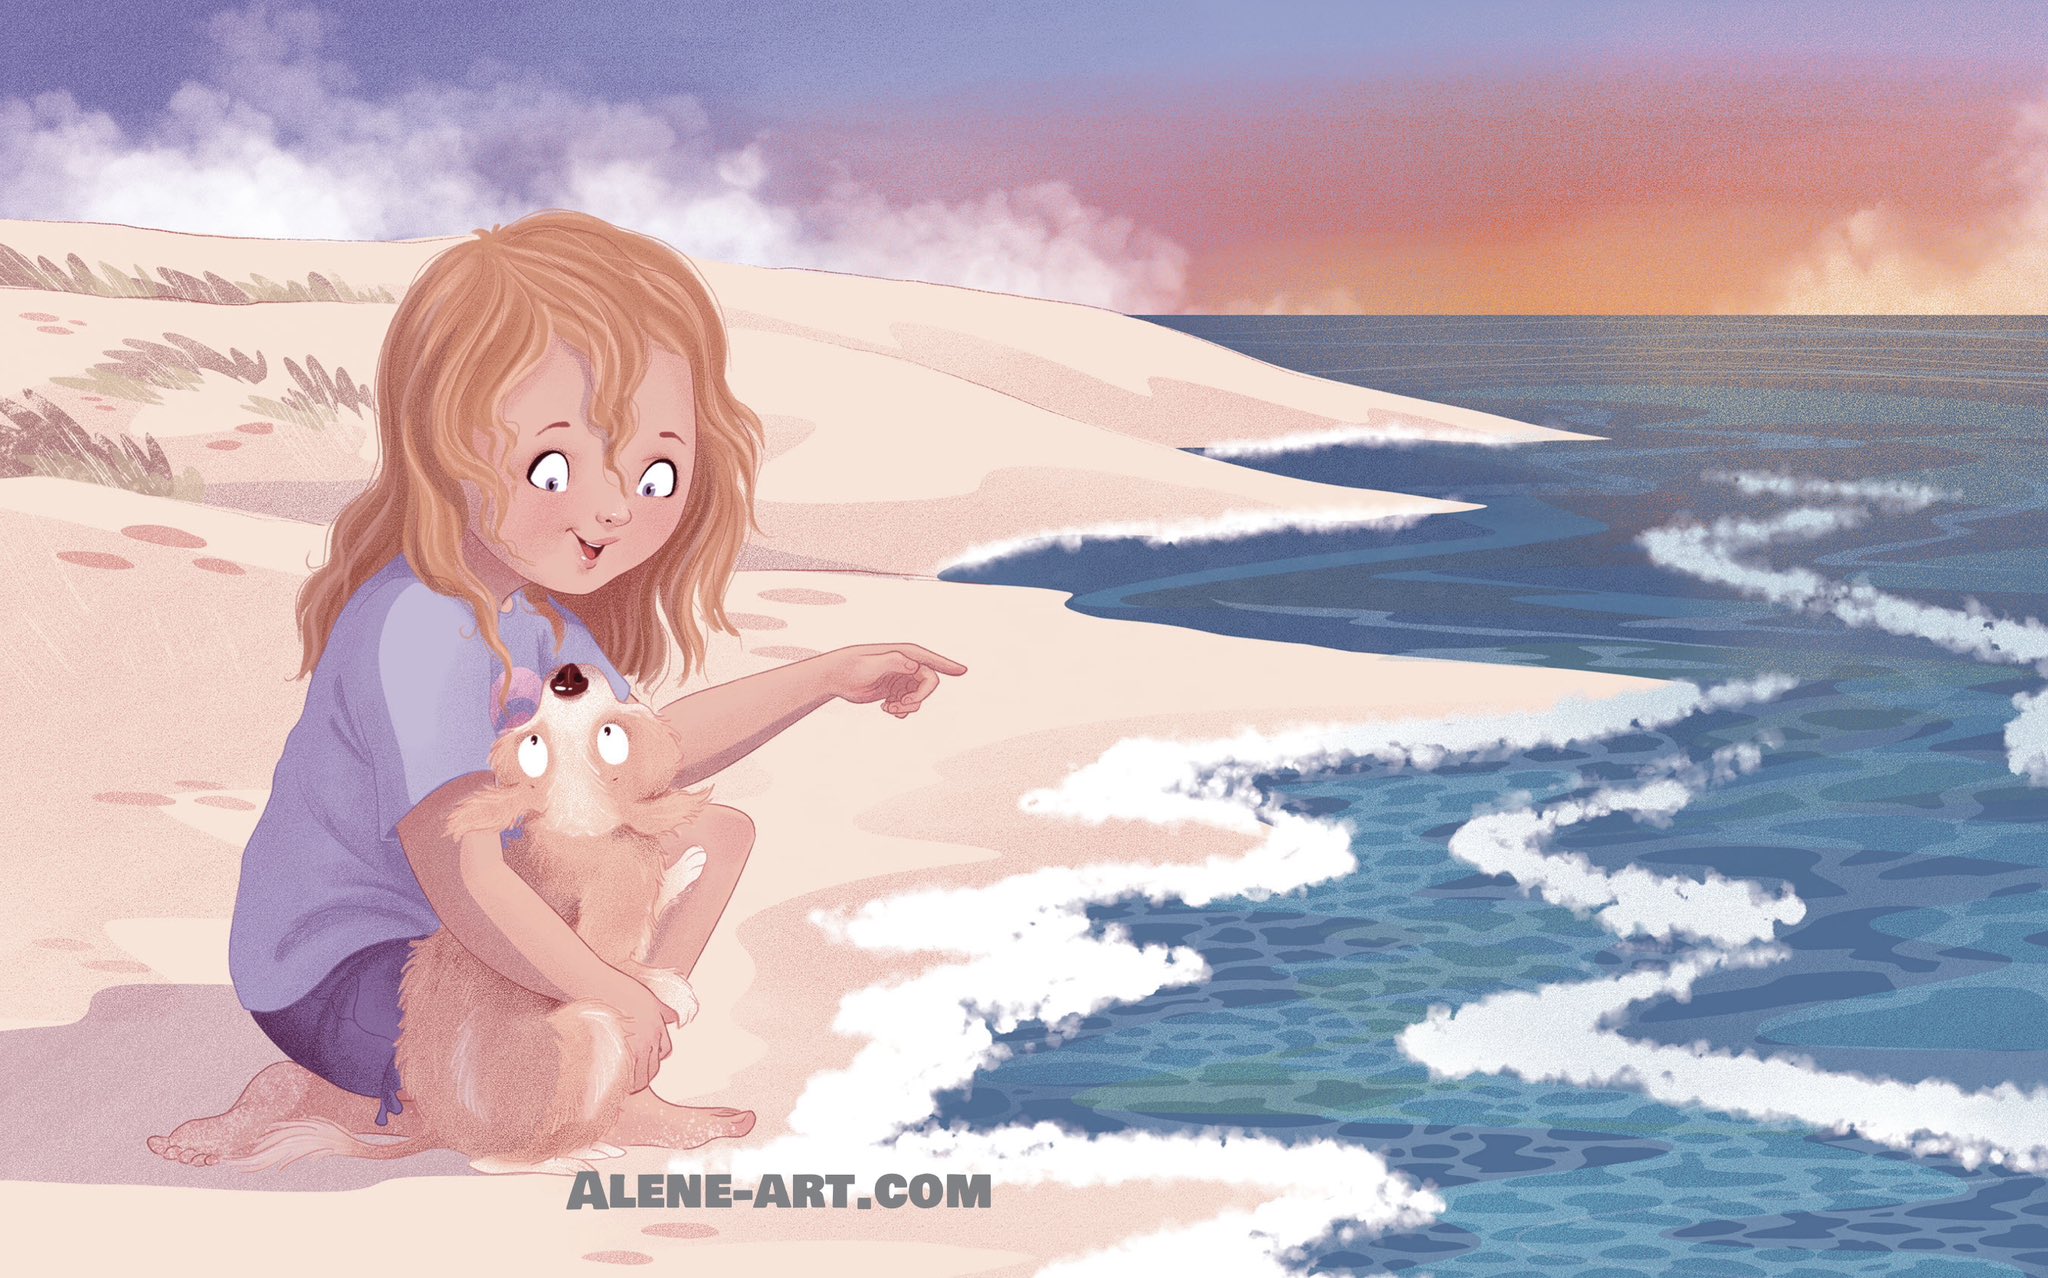 Little Dune by Lisa Van der Wielen, Children's books read aloud